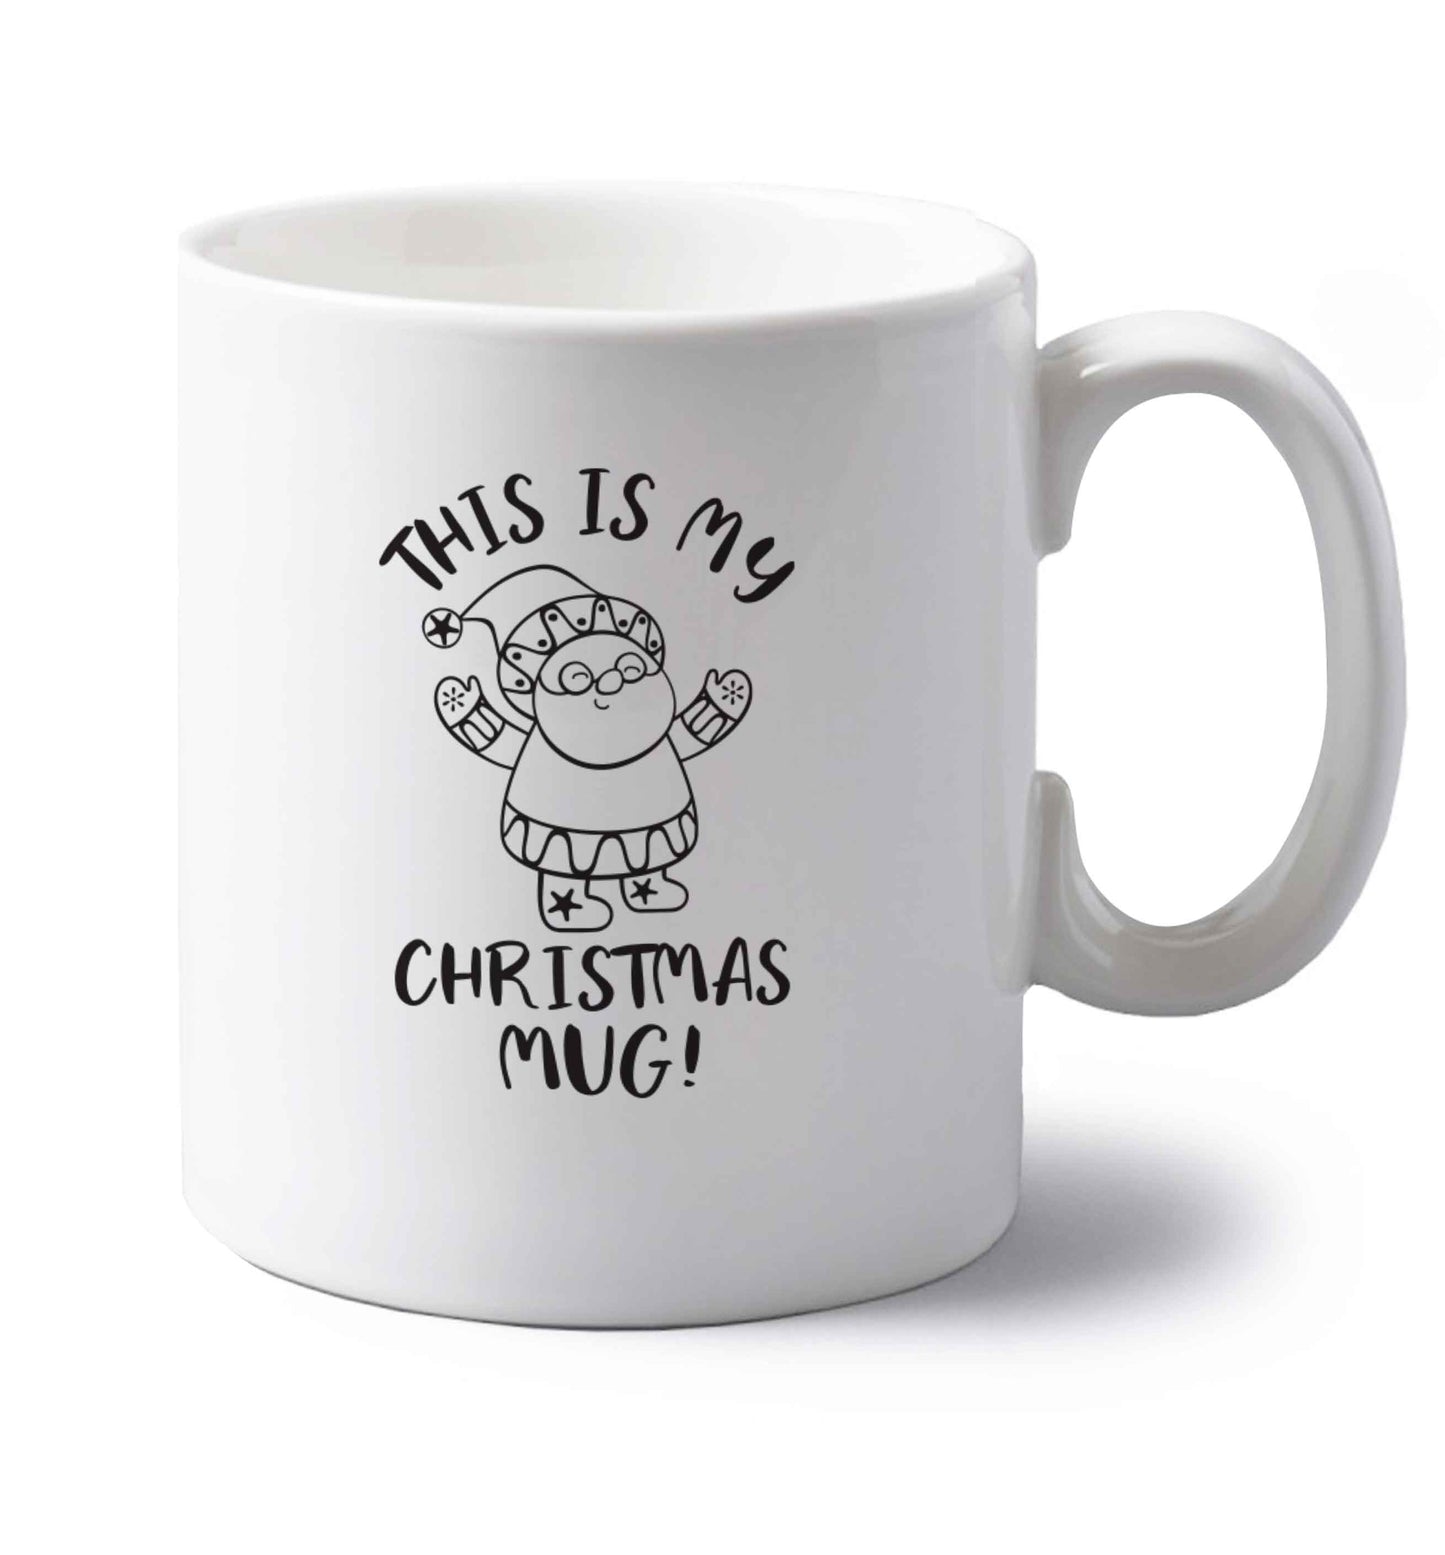 This is my Christmas mug left handed white ceramic mug 